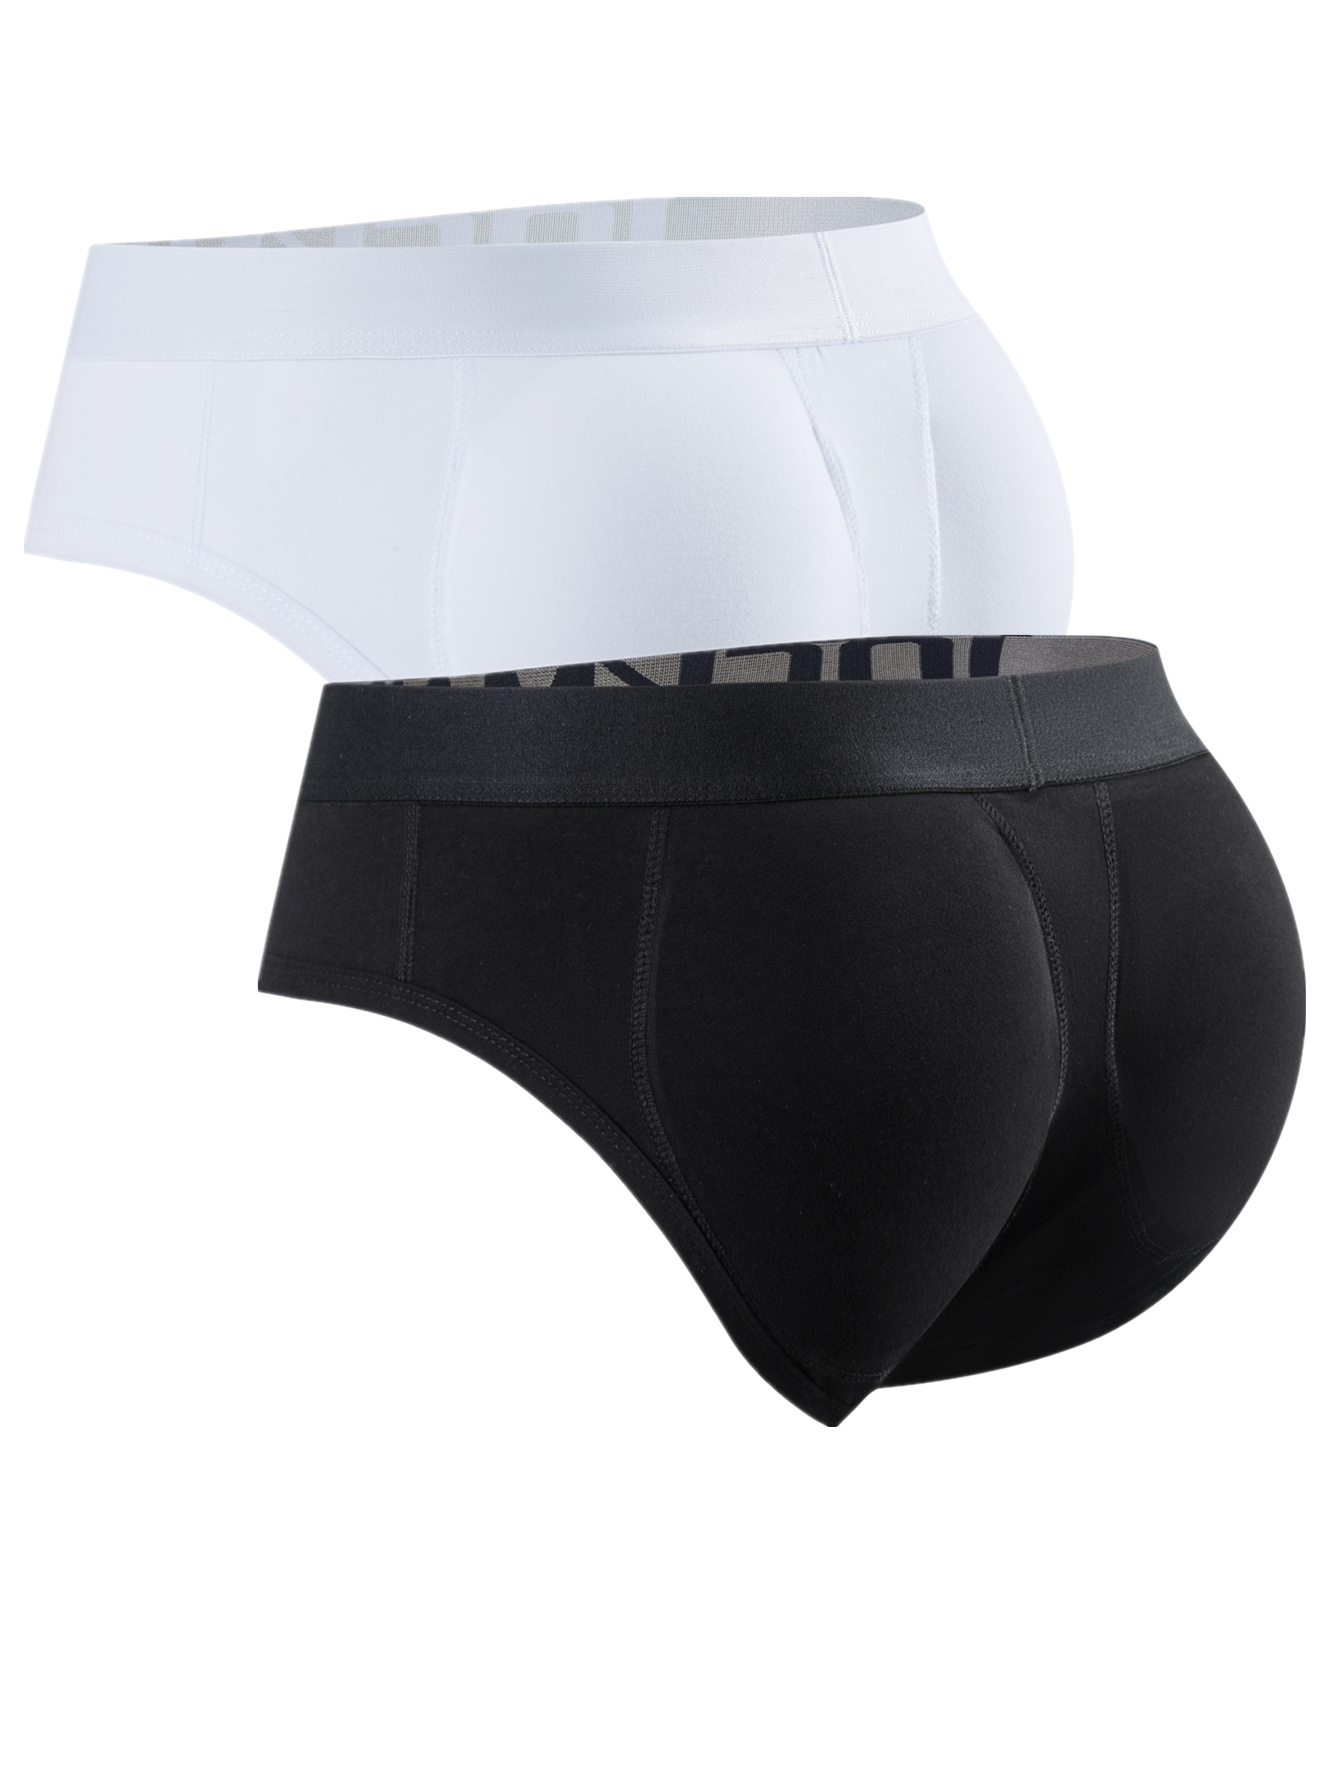 Men Swimwear Bulge Enhancer Cup Sponge Pad Removable Underwear